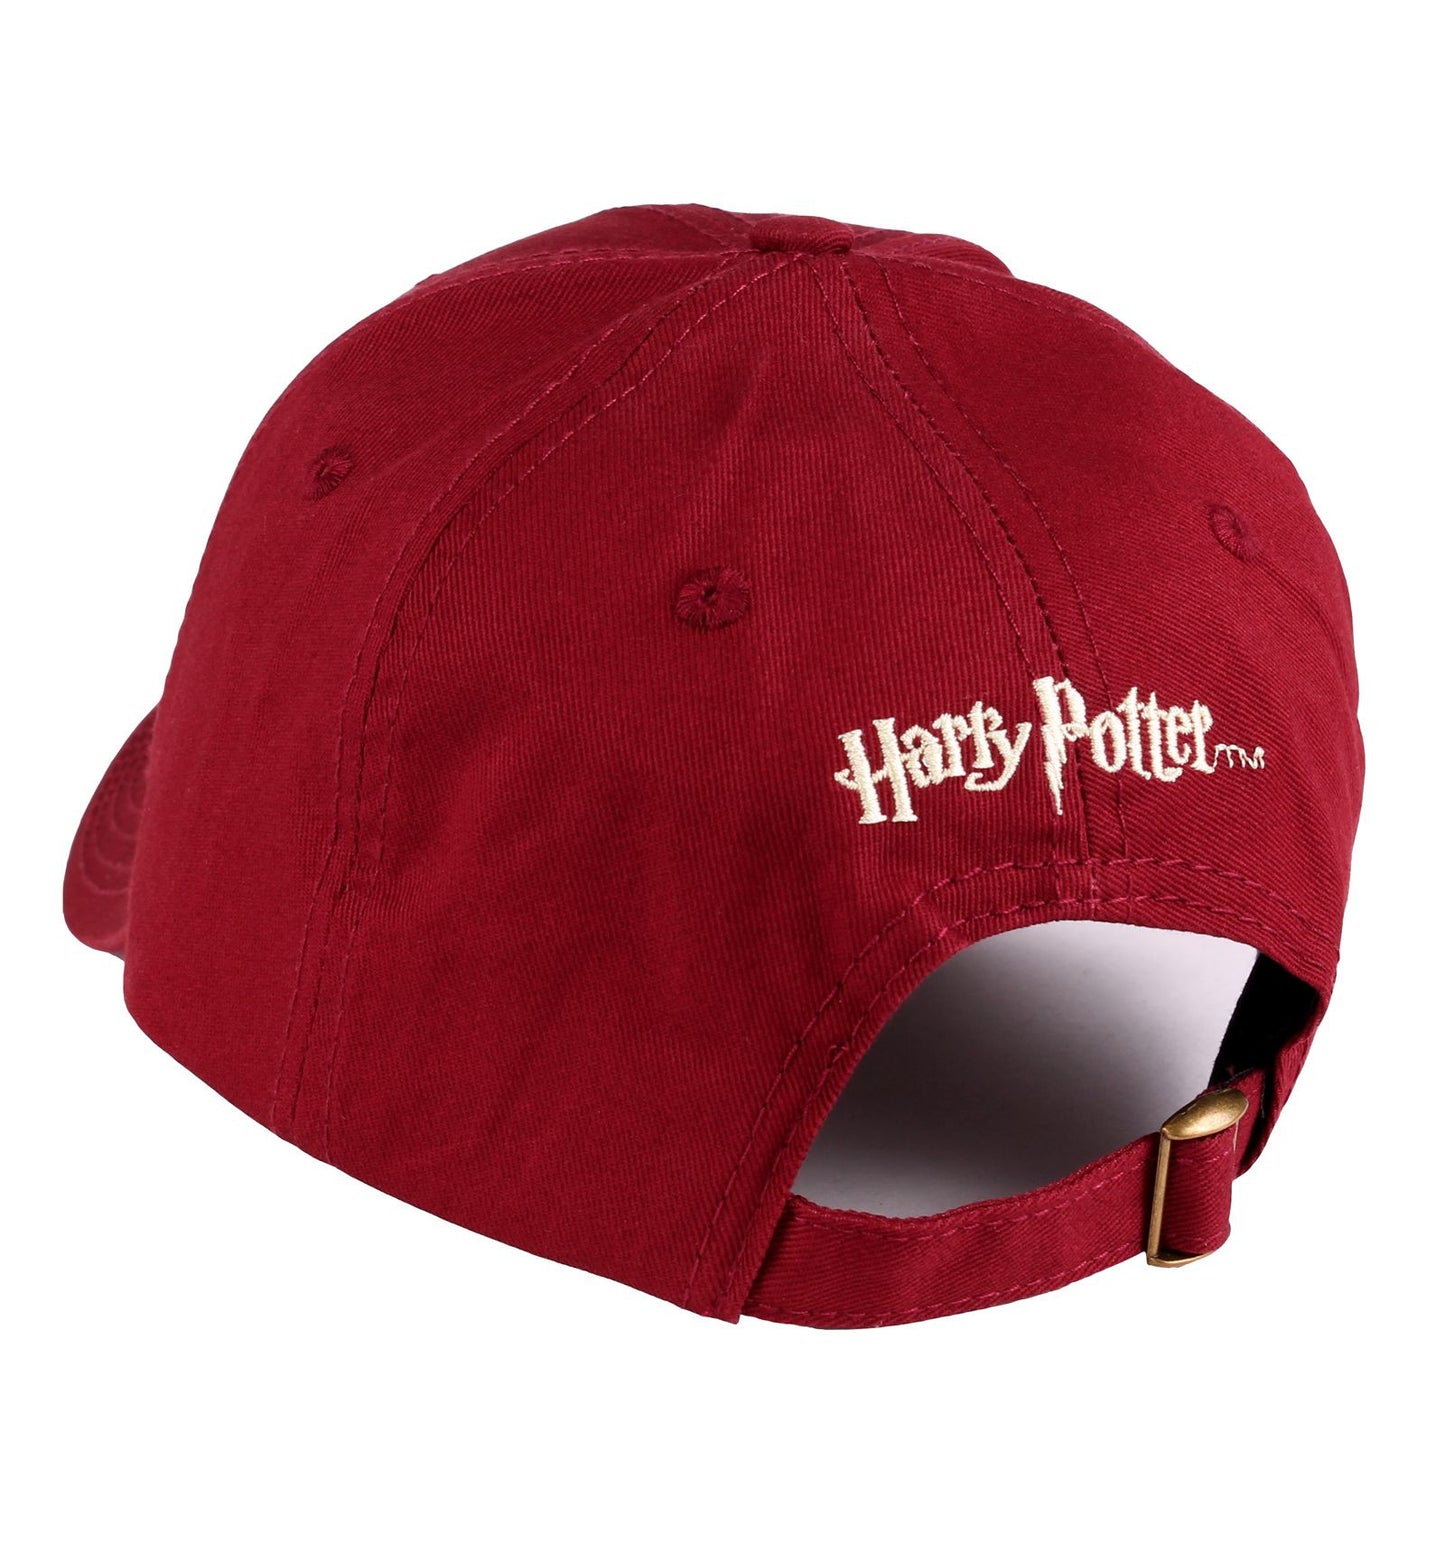 Harry Potter Cap - Track 9 3/4